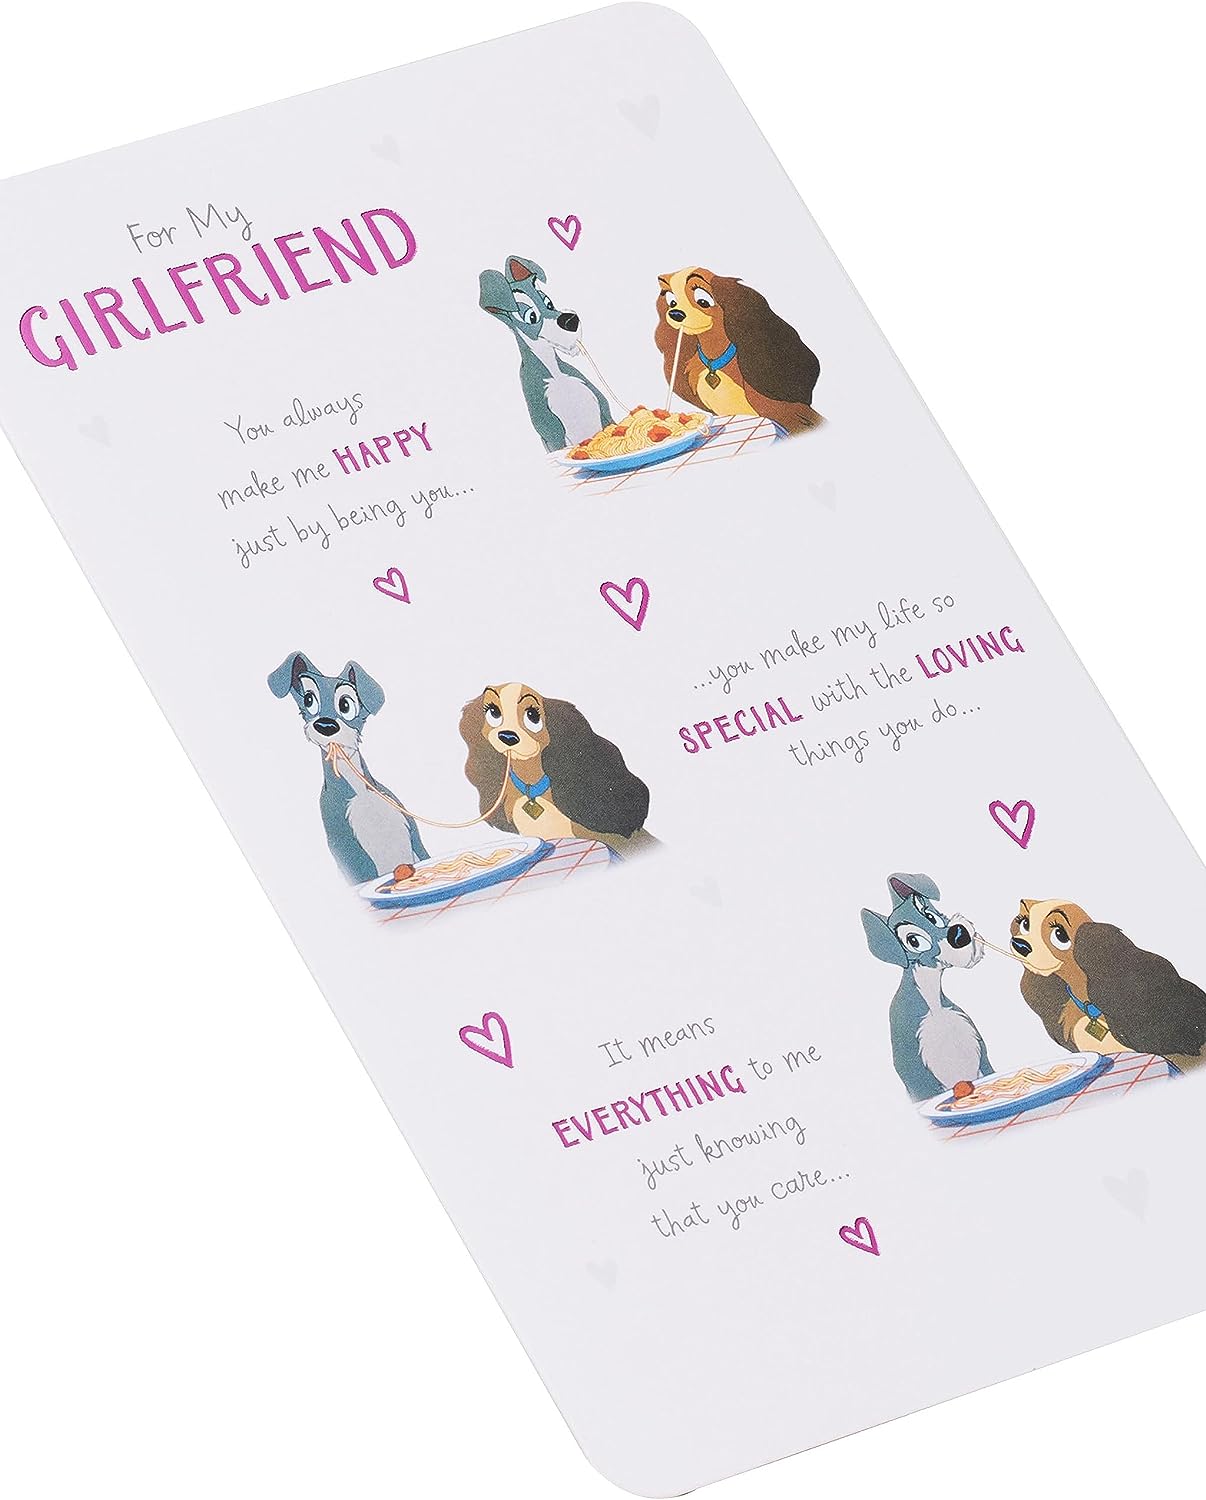 Lady and the Tramp Design Disney Girlfriend Birthday Card